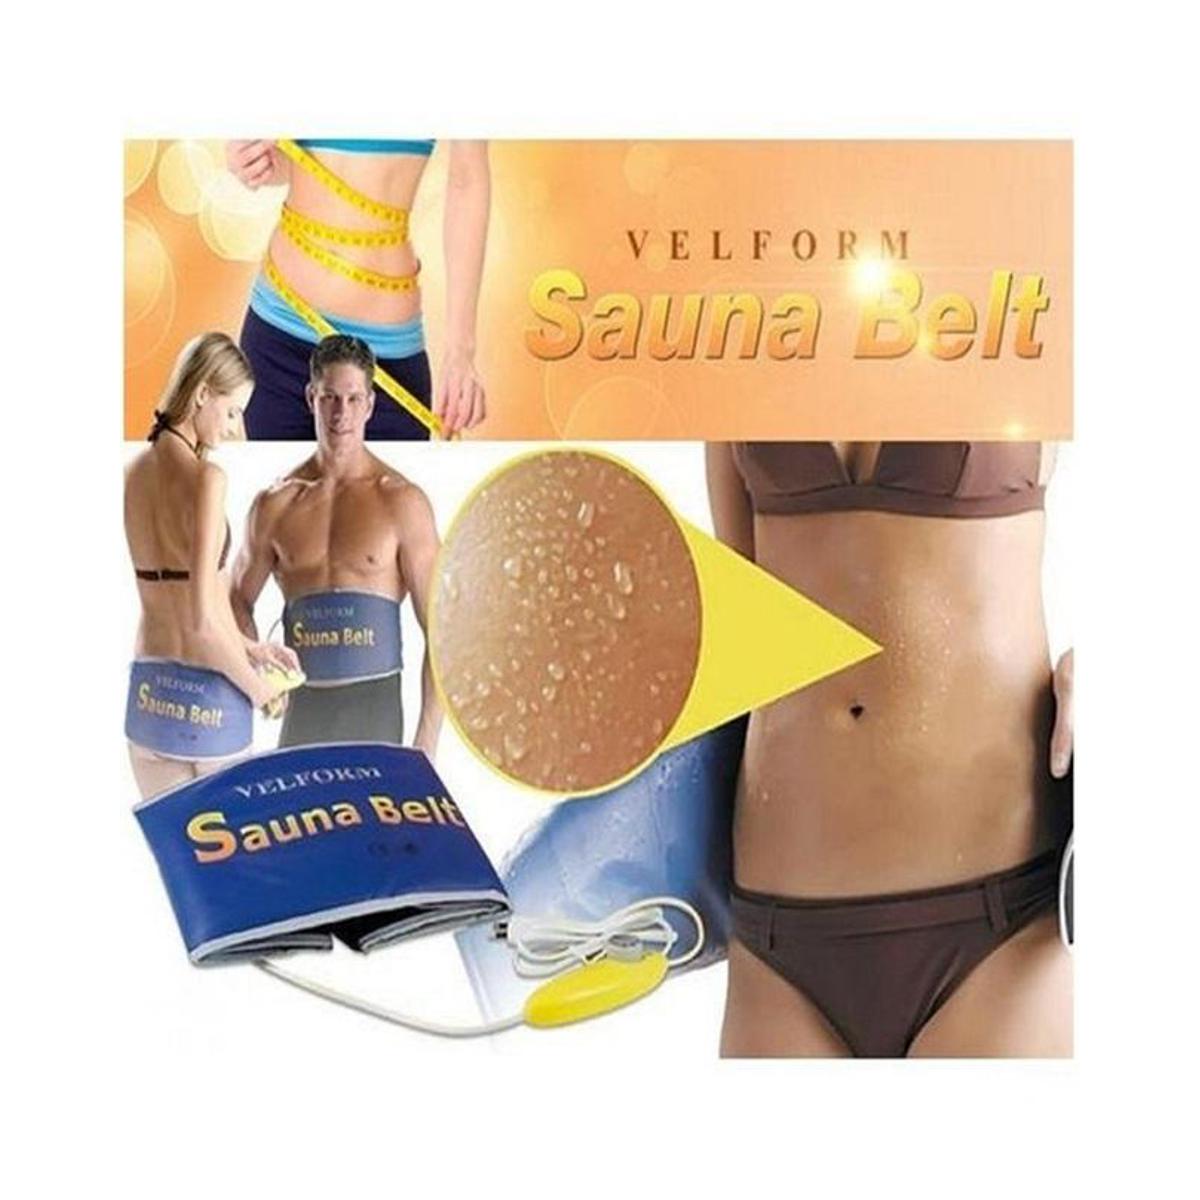 Buy Velform Sauna Belt - Perfect Shaping Kit